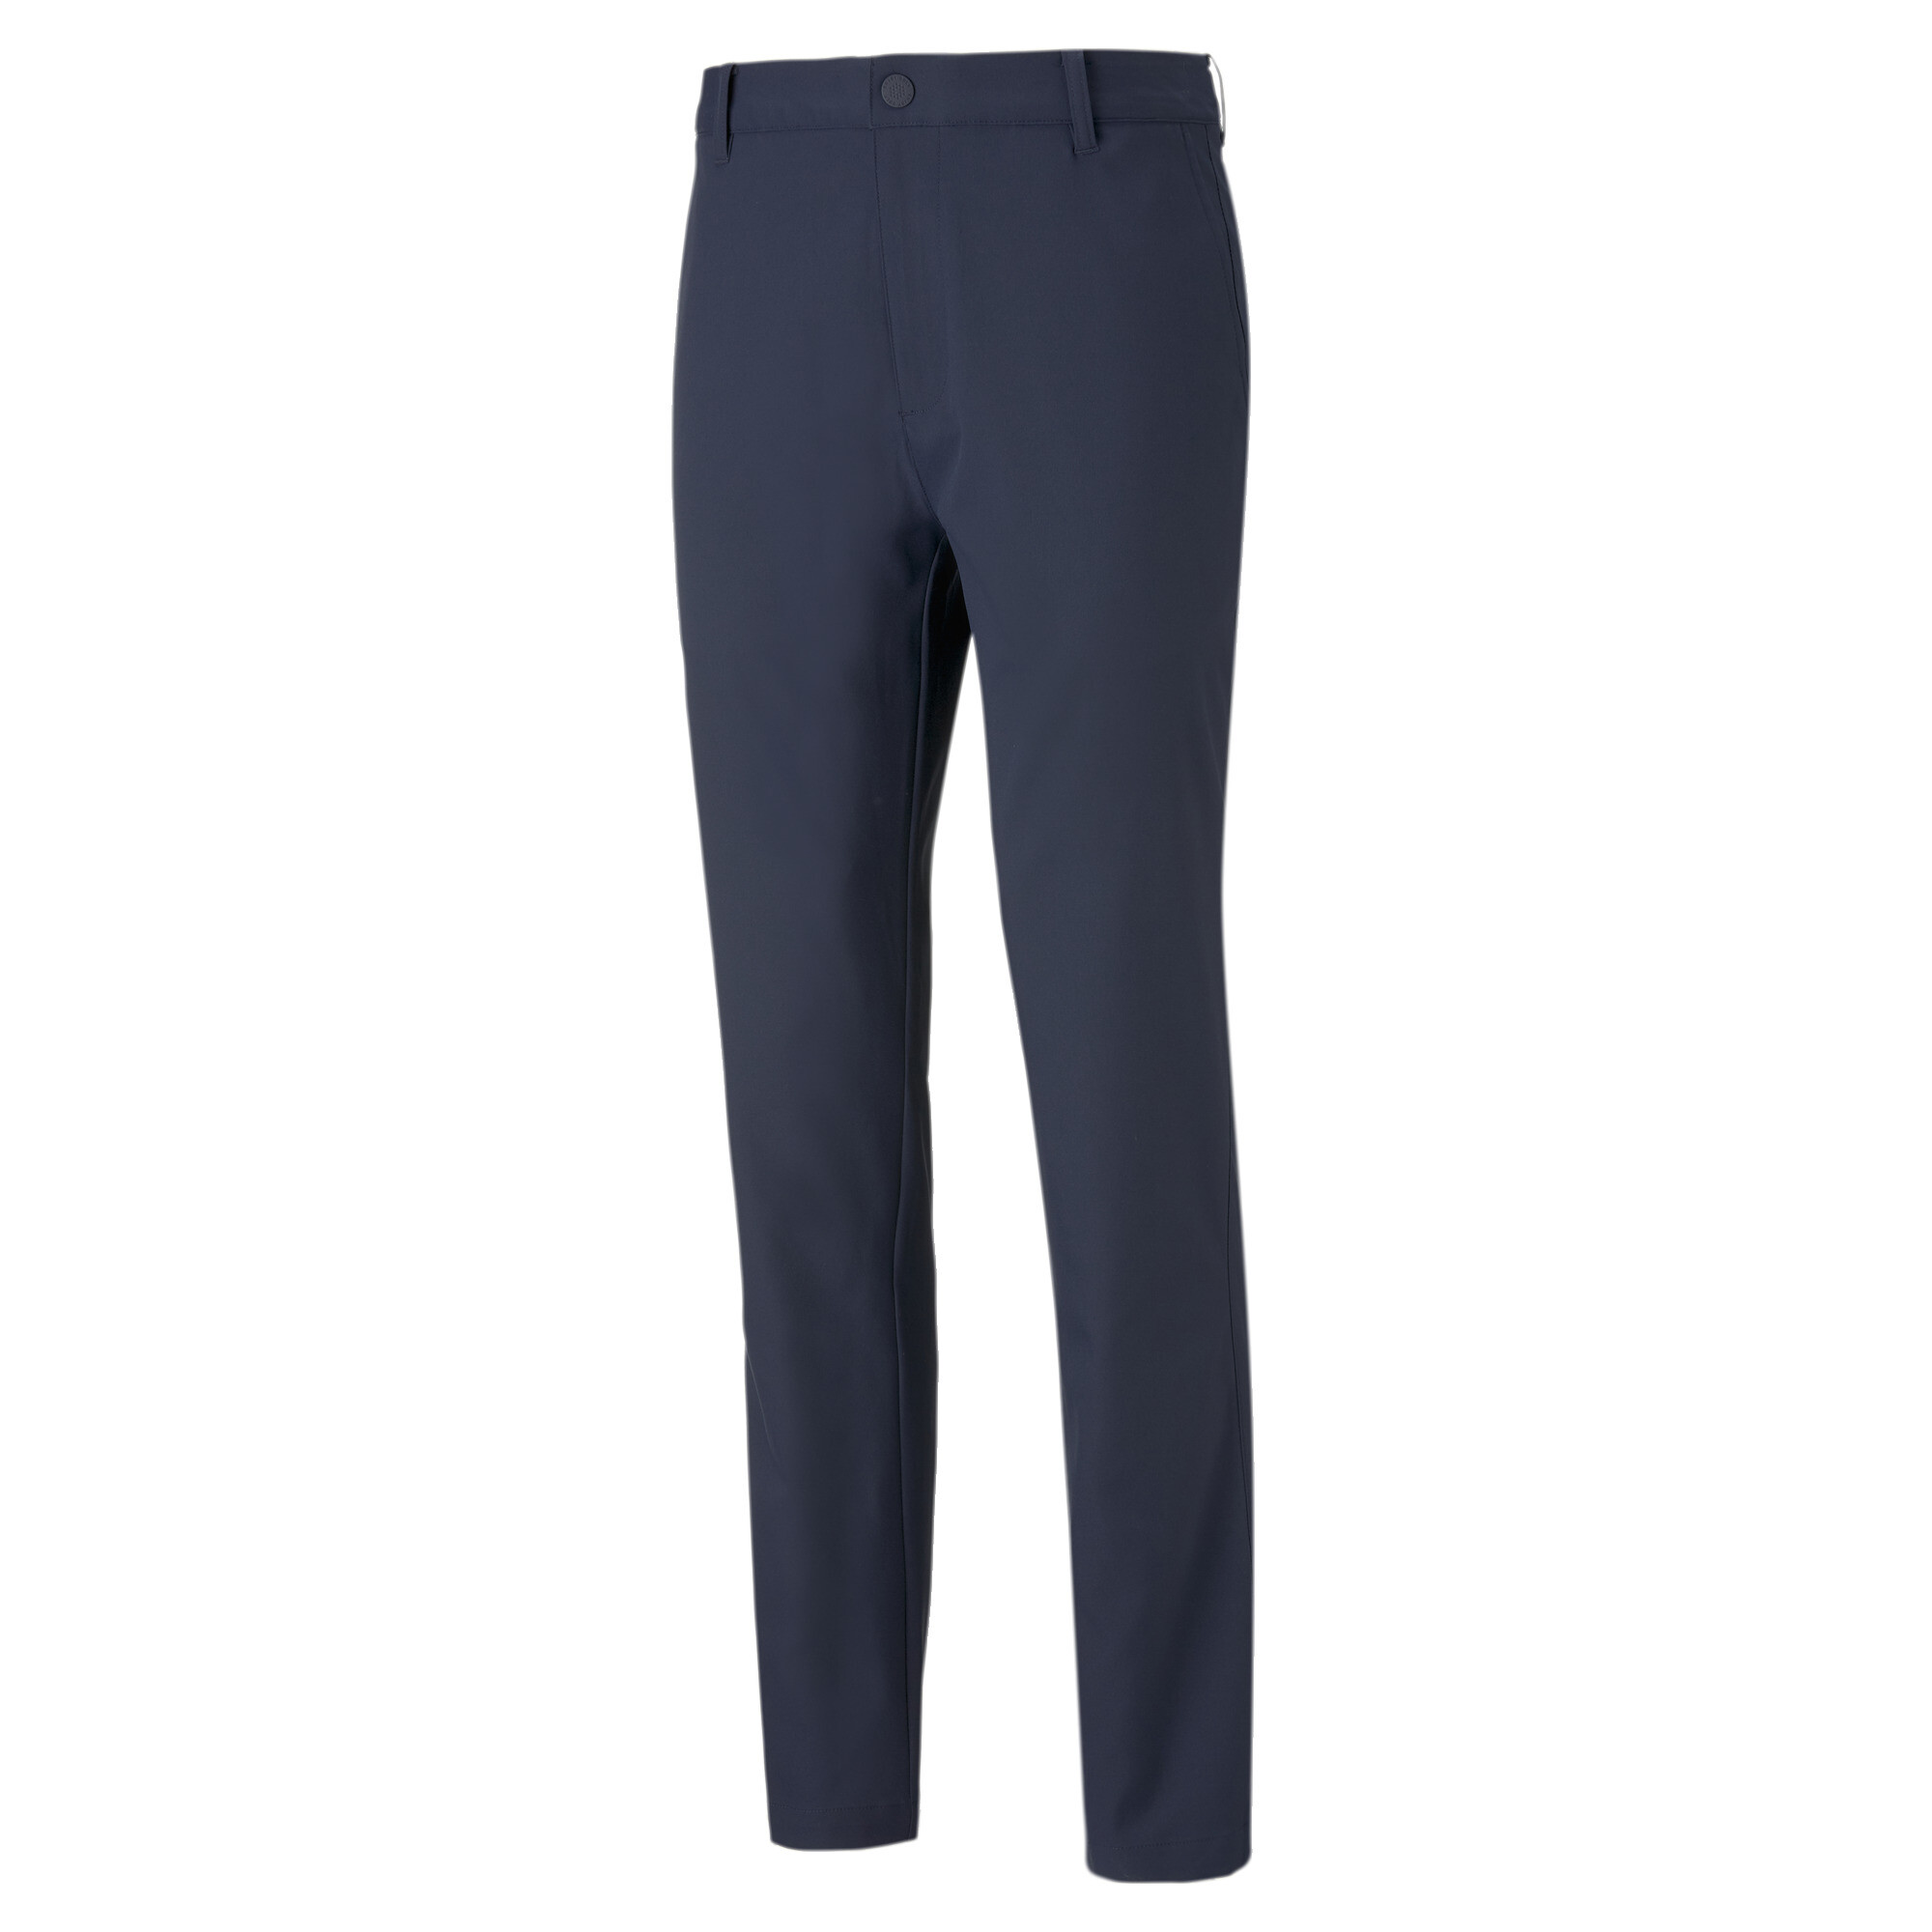 Men's Puma Dealer Golf Pants, Blue, Size 30/30, Clothing